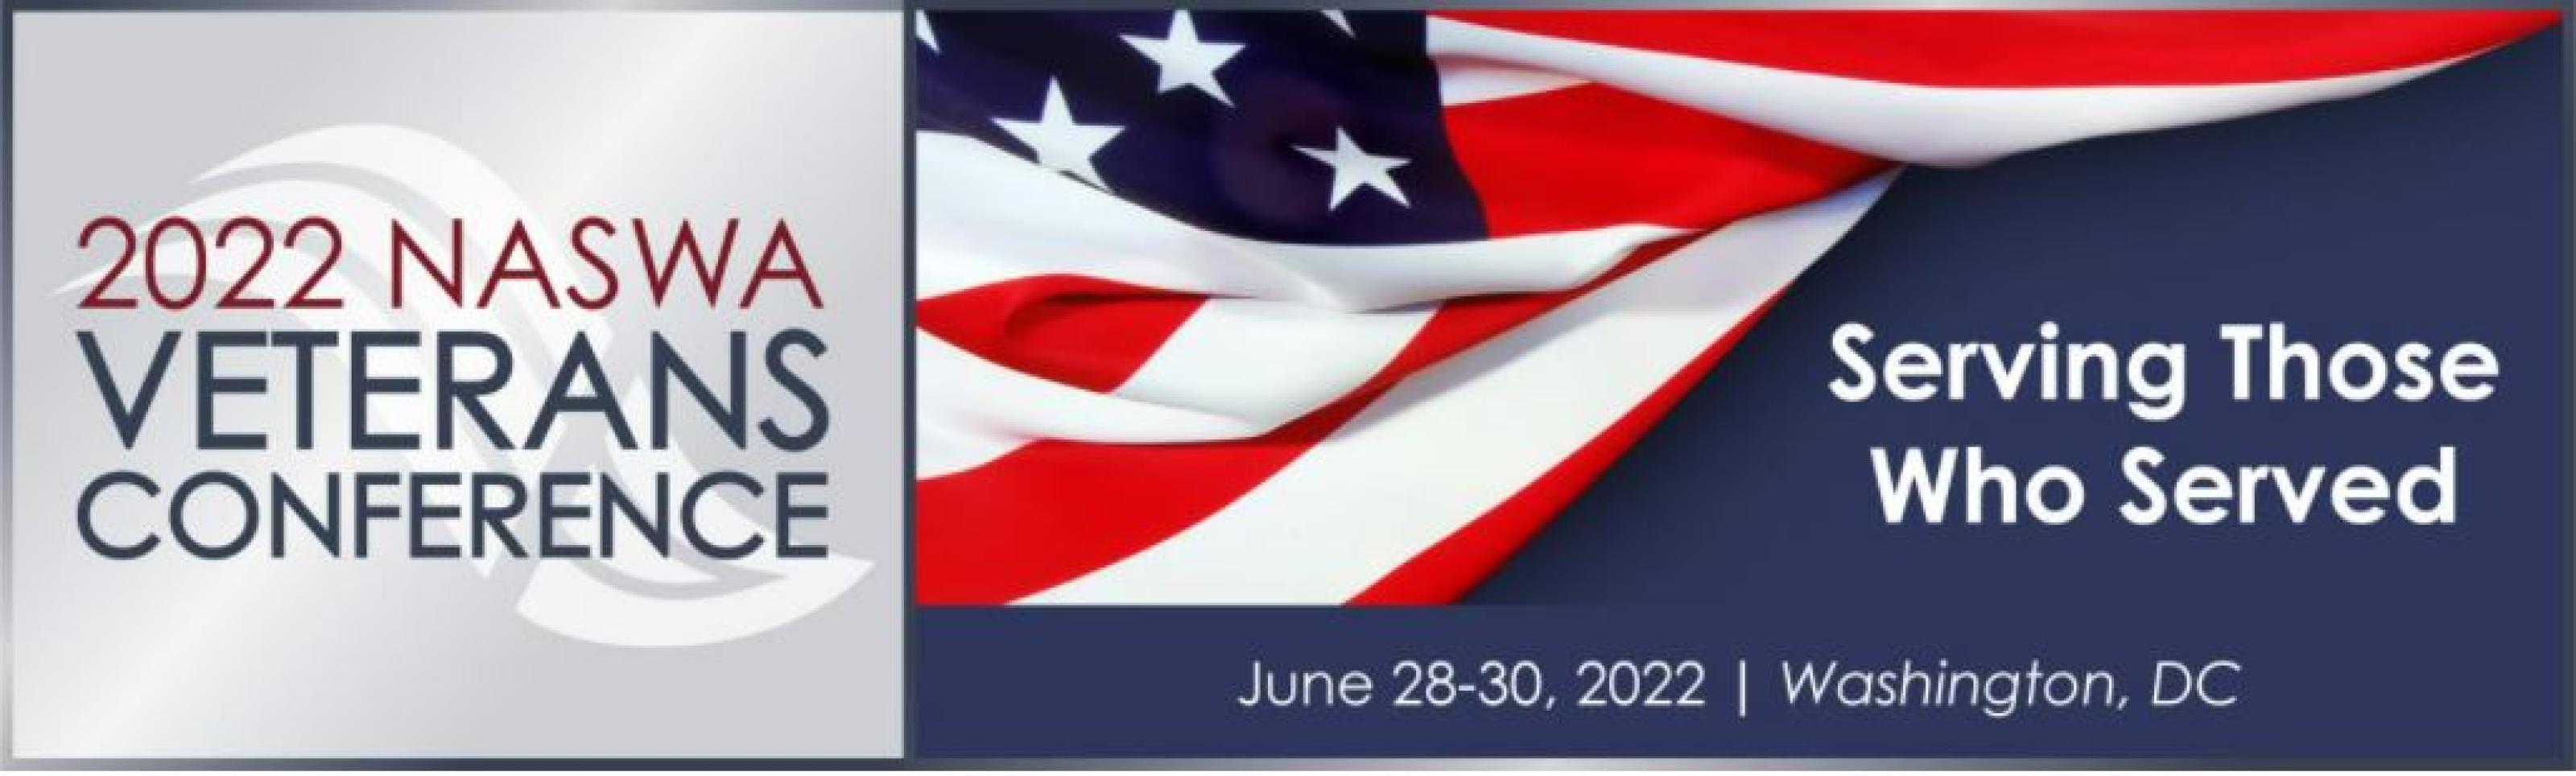 2022 NASWA Veterans Conference